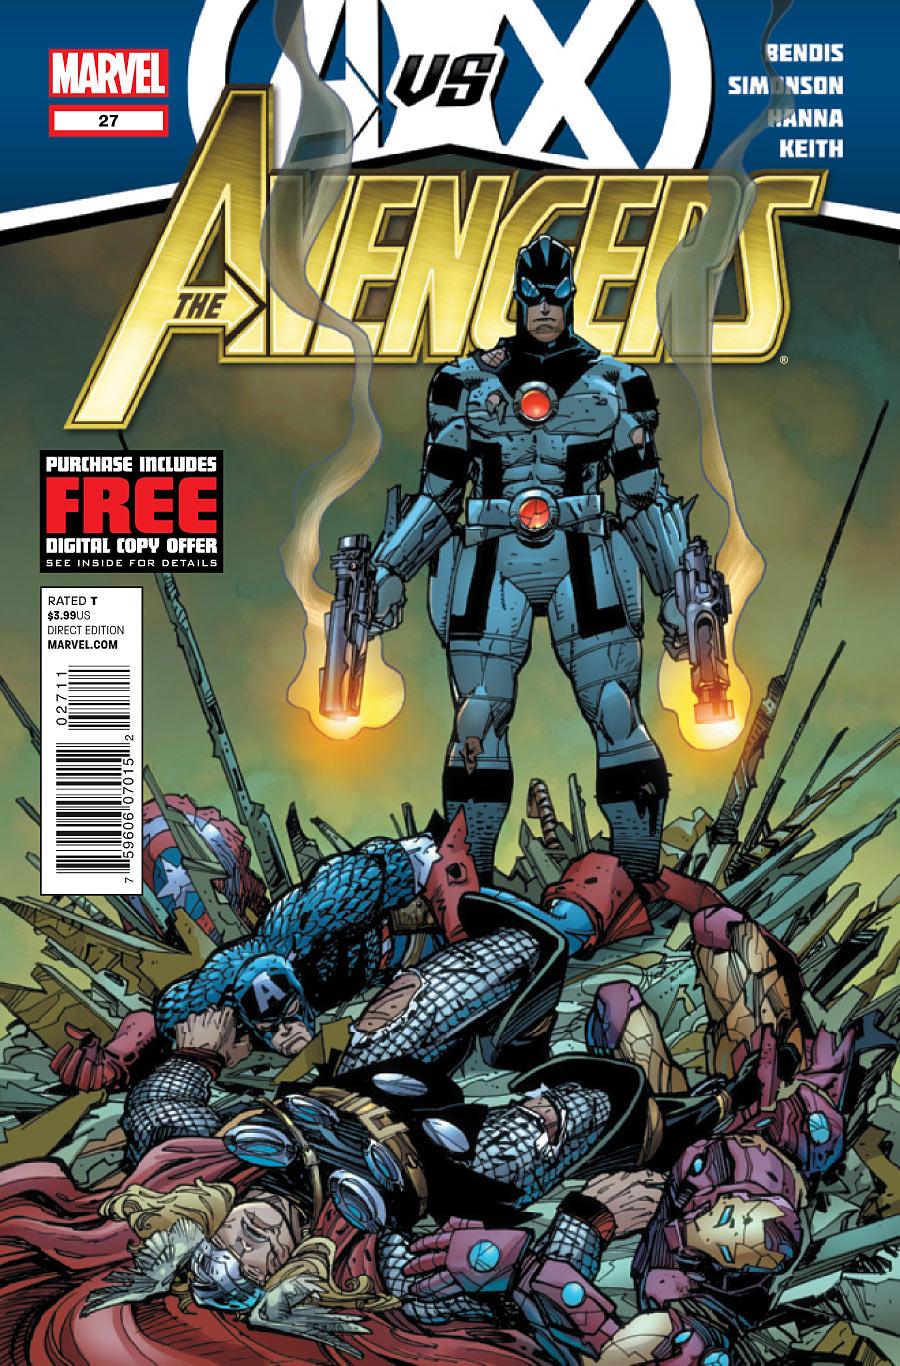 The Avengers Vol. 4 #27